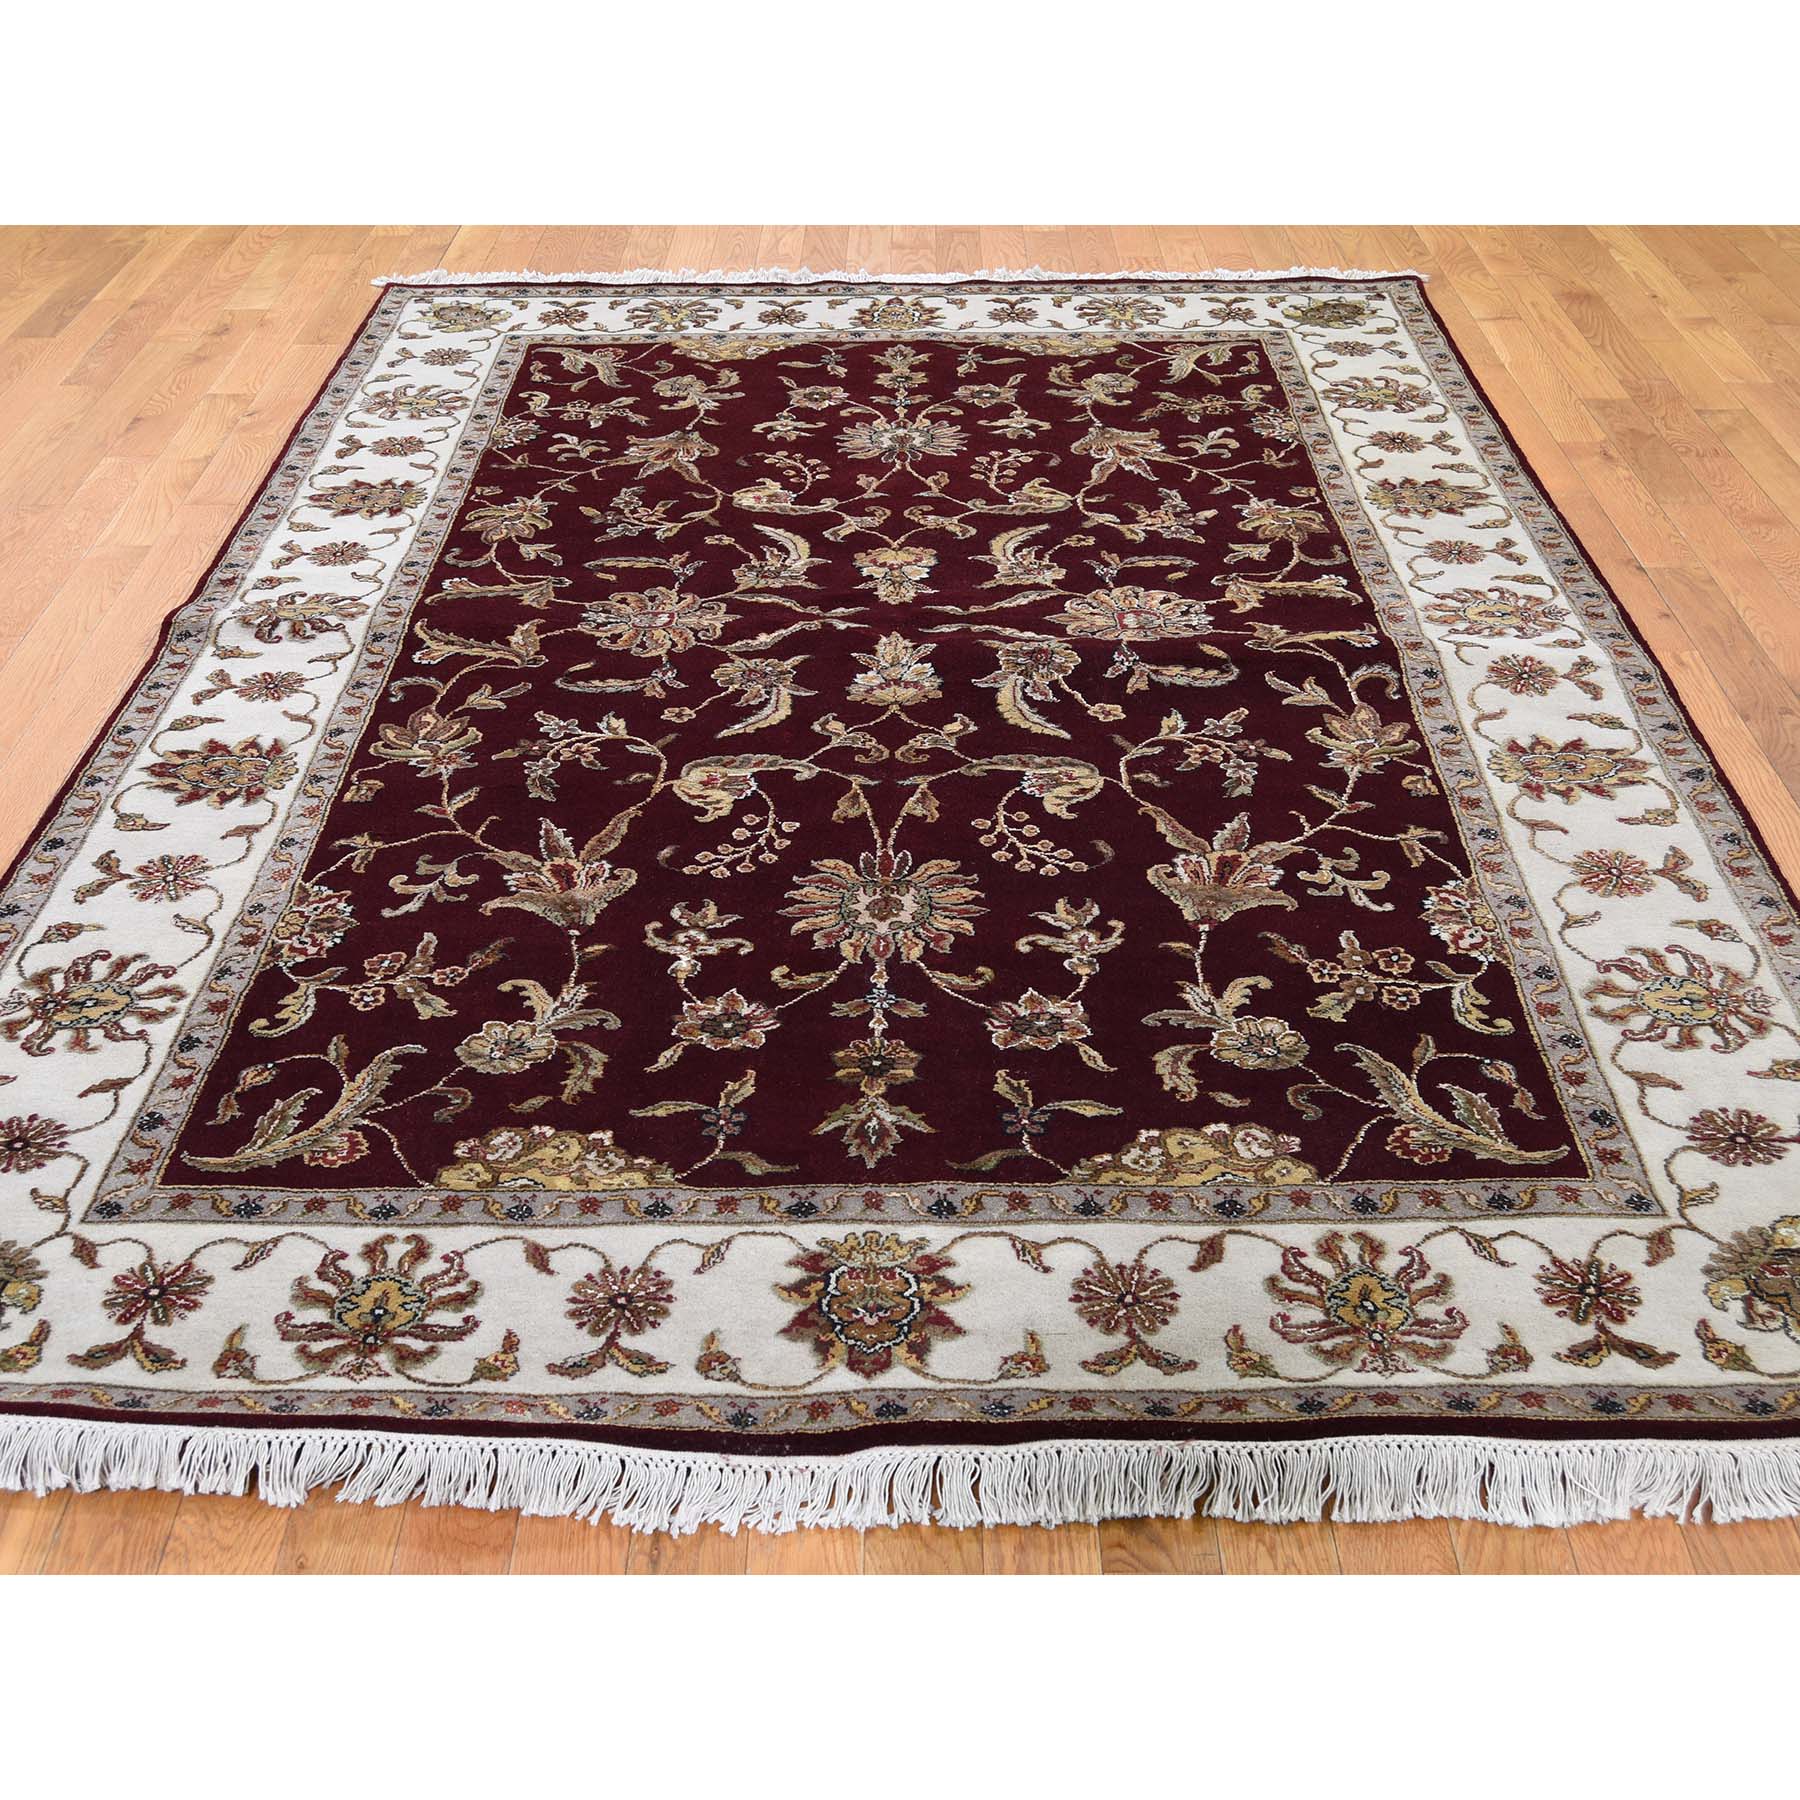 6-x9-1 Rajasthan Half Wool and Half Silk Hand-Knotted Oriental Rug 